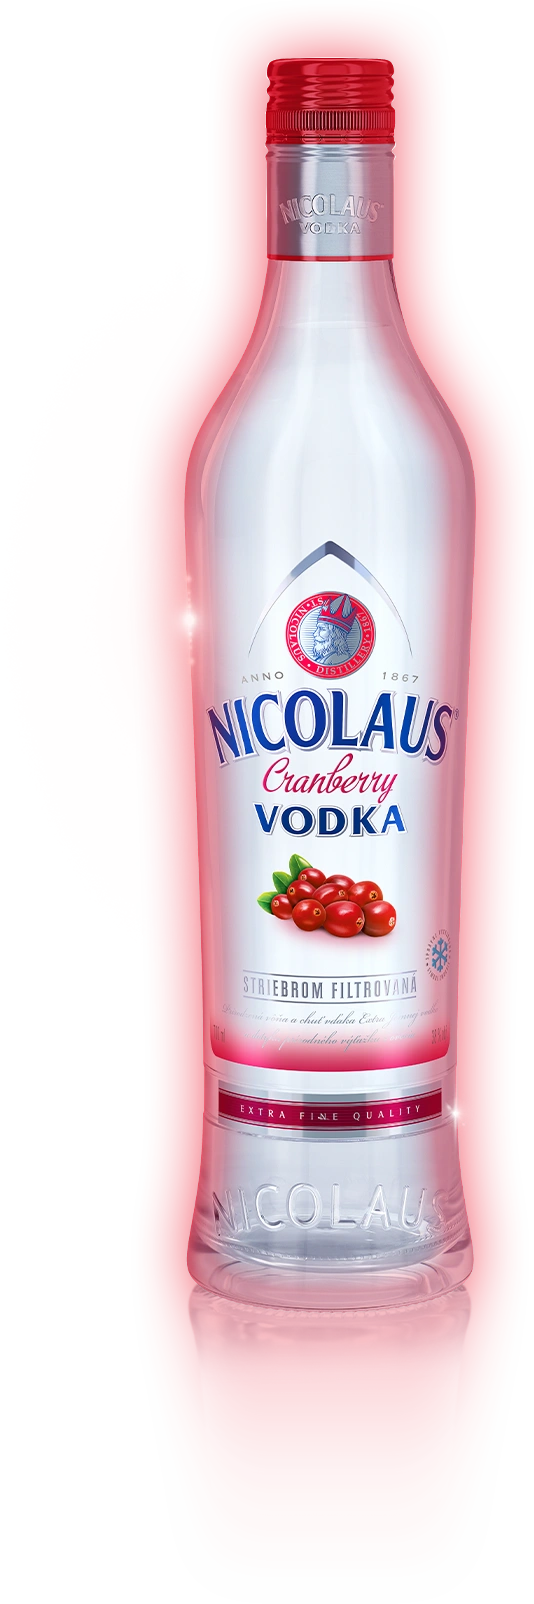 Nicolaus Cranberry vodka